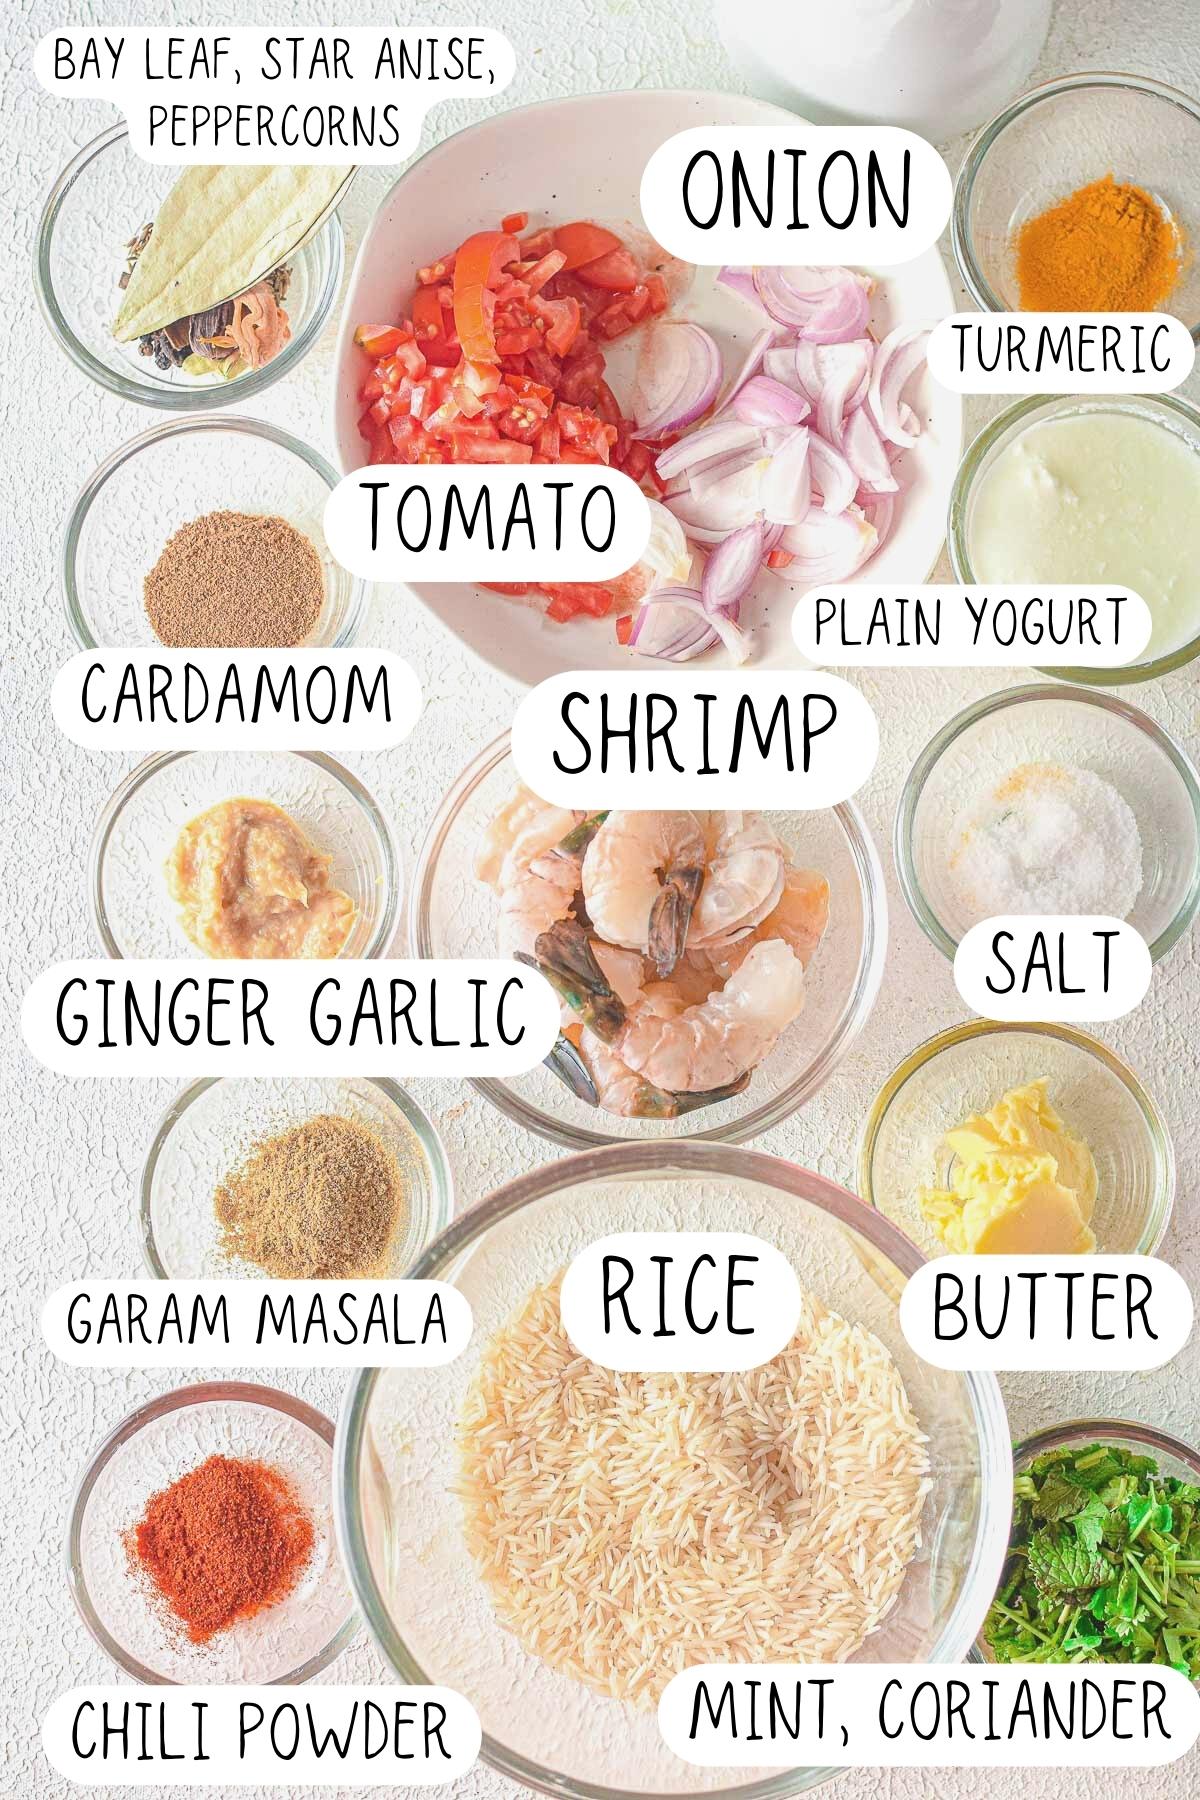 ingredients for shrimp biryani, including rice, onion, tomato, yogurt, turmeric, peppercorns, anise, cardamom, butter